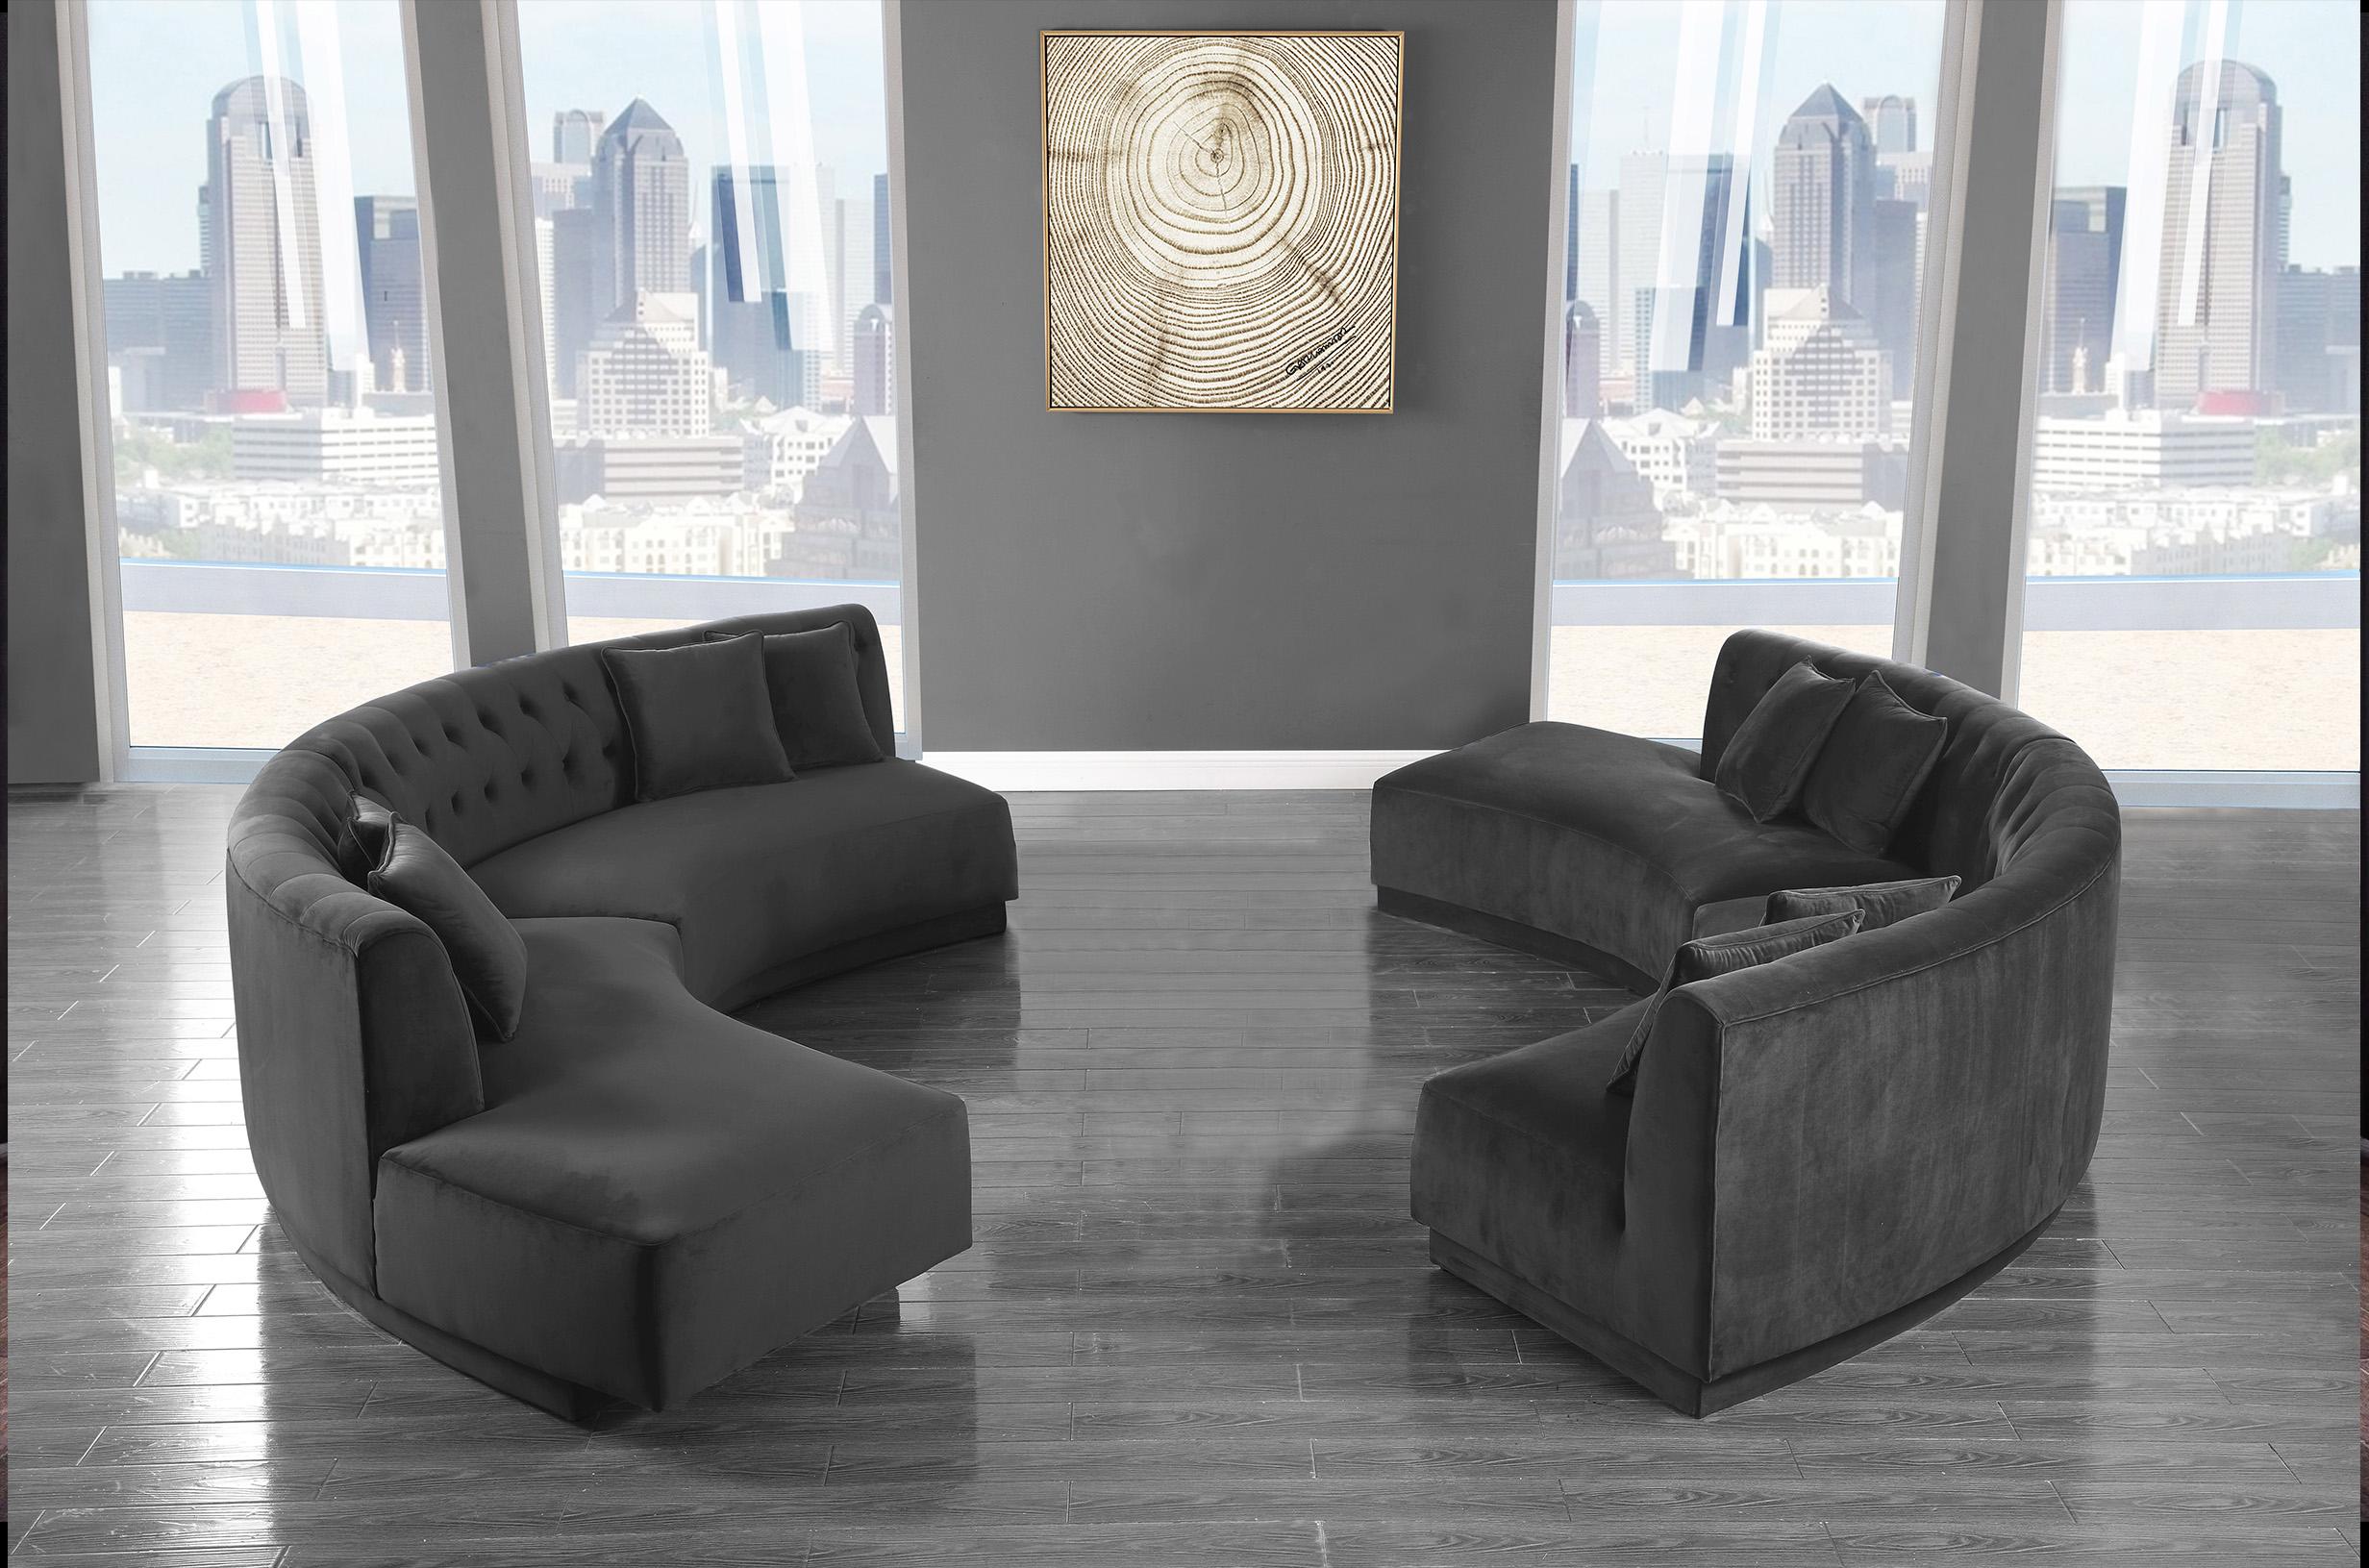 

    
641Grey-Sectional Grey Velvet Tufted Sectional Sofa KENZI 641Grey Meridian Contemporary Modern
